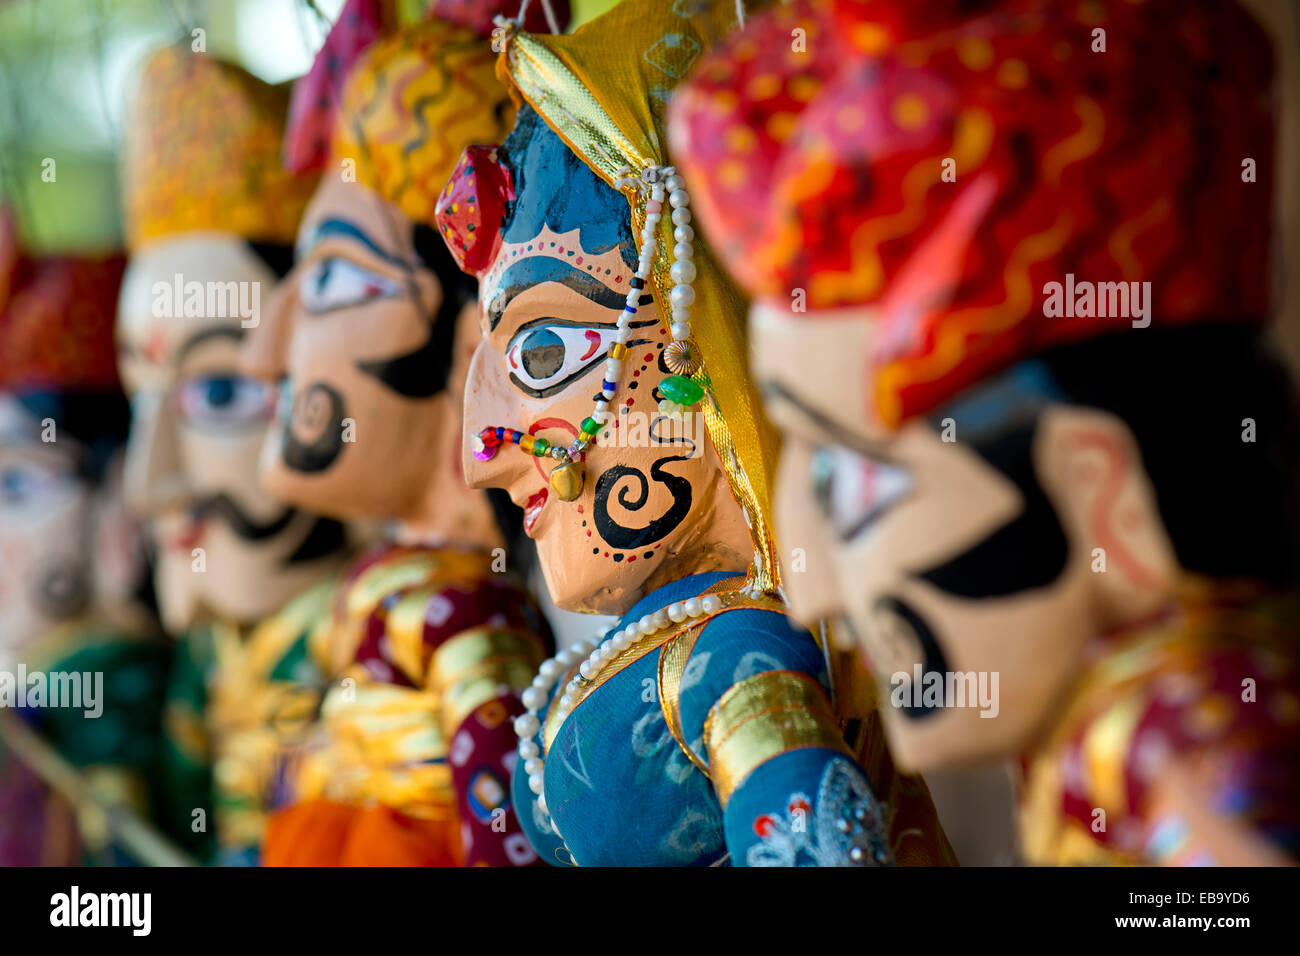 Marionettes, traditional crafts, Jodhpur, Rajasthan, India Stock Photo